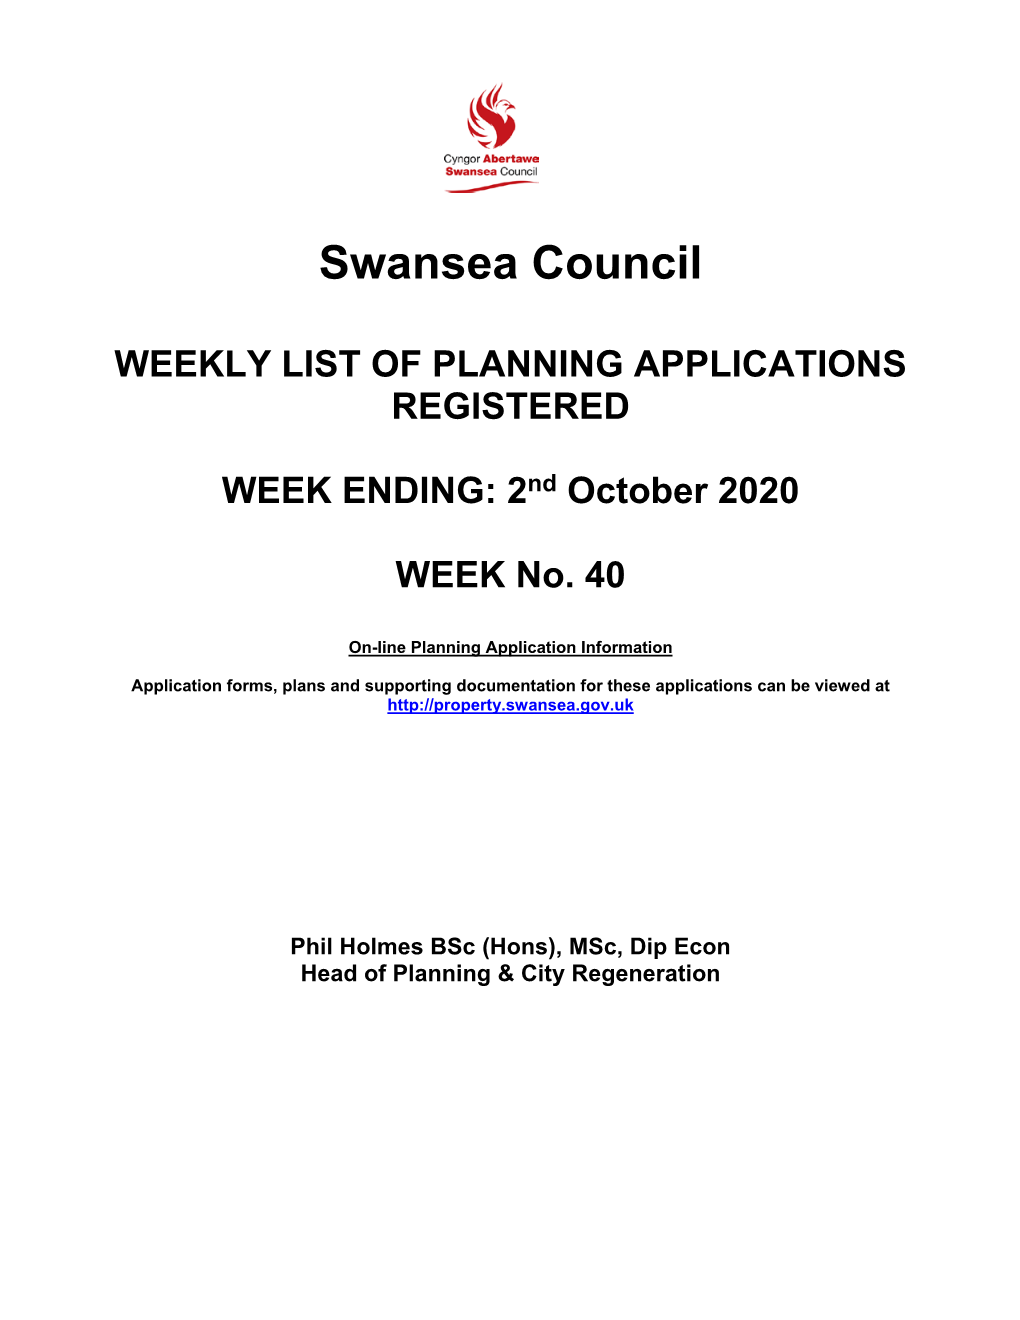 Applications for Week Ending 2 October 2020